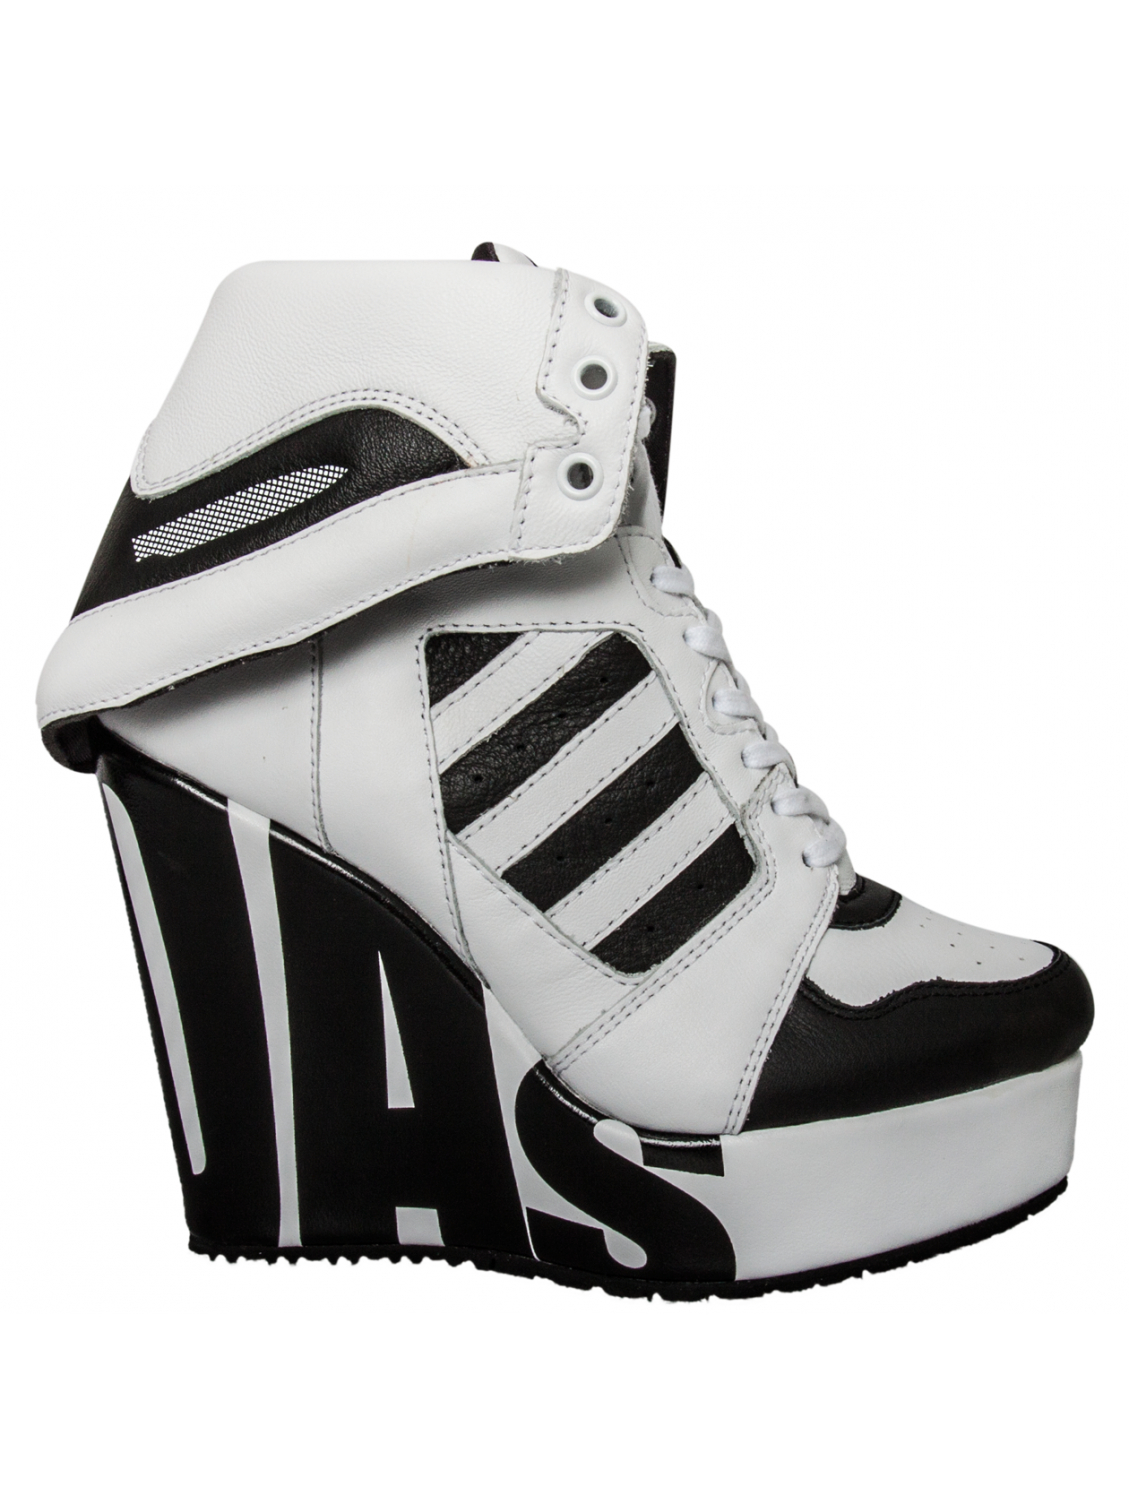 Jeremy scott for adidas Streetball Platform Logo Wedge White/Black in ...